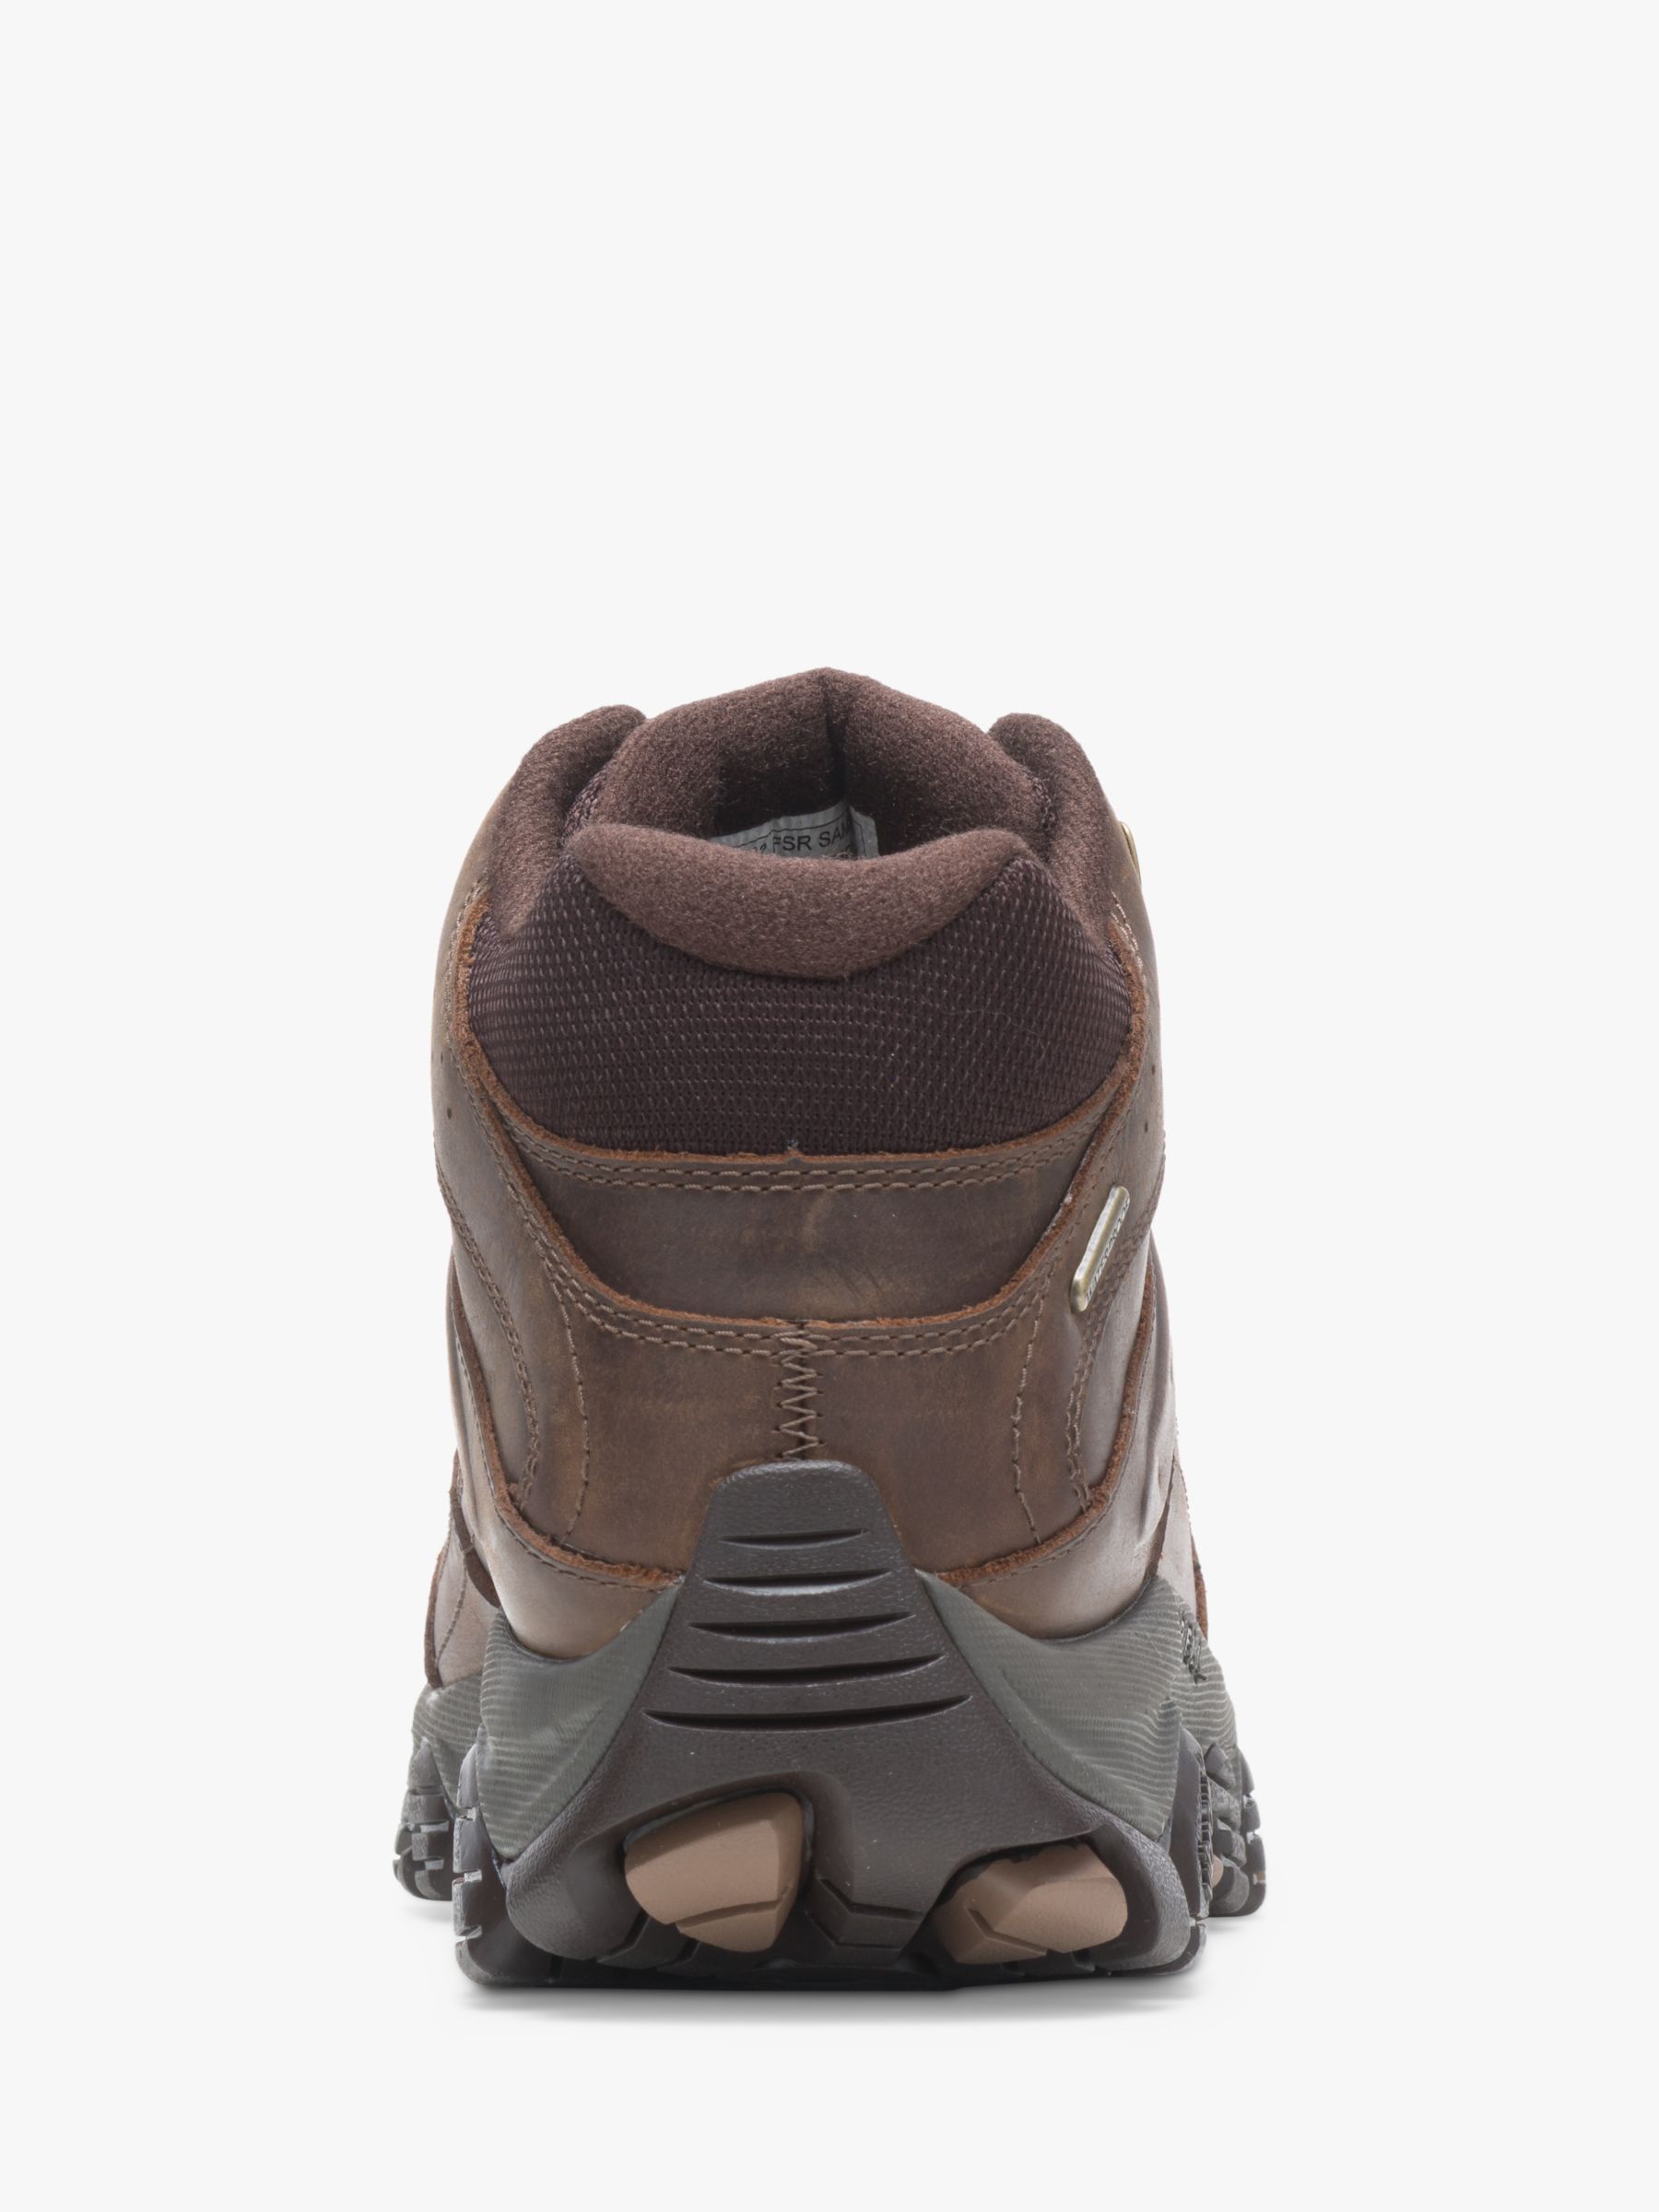 Merrell MOAB Adventure 3 Mid Waterproof Men's Hiking Shoes, Earth, 7